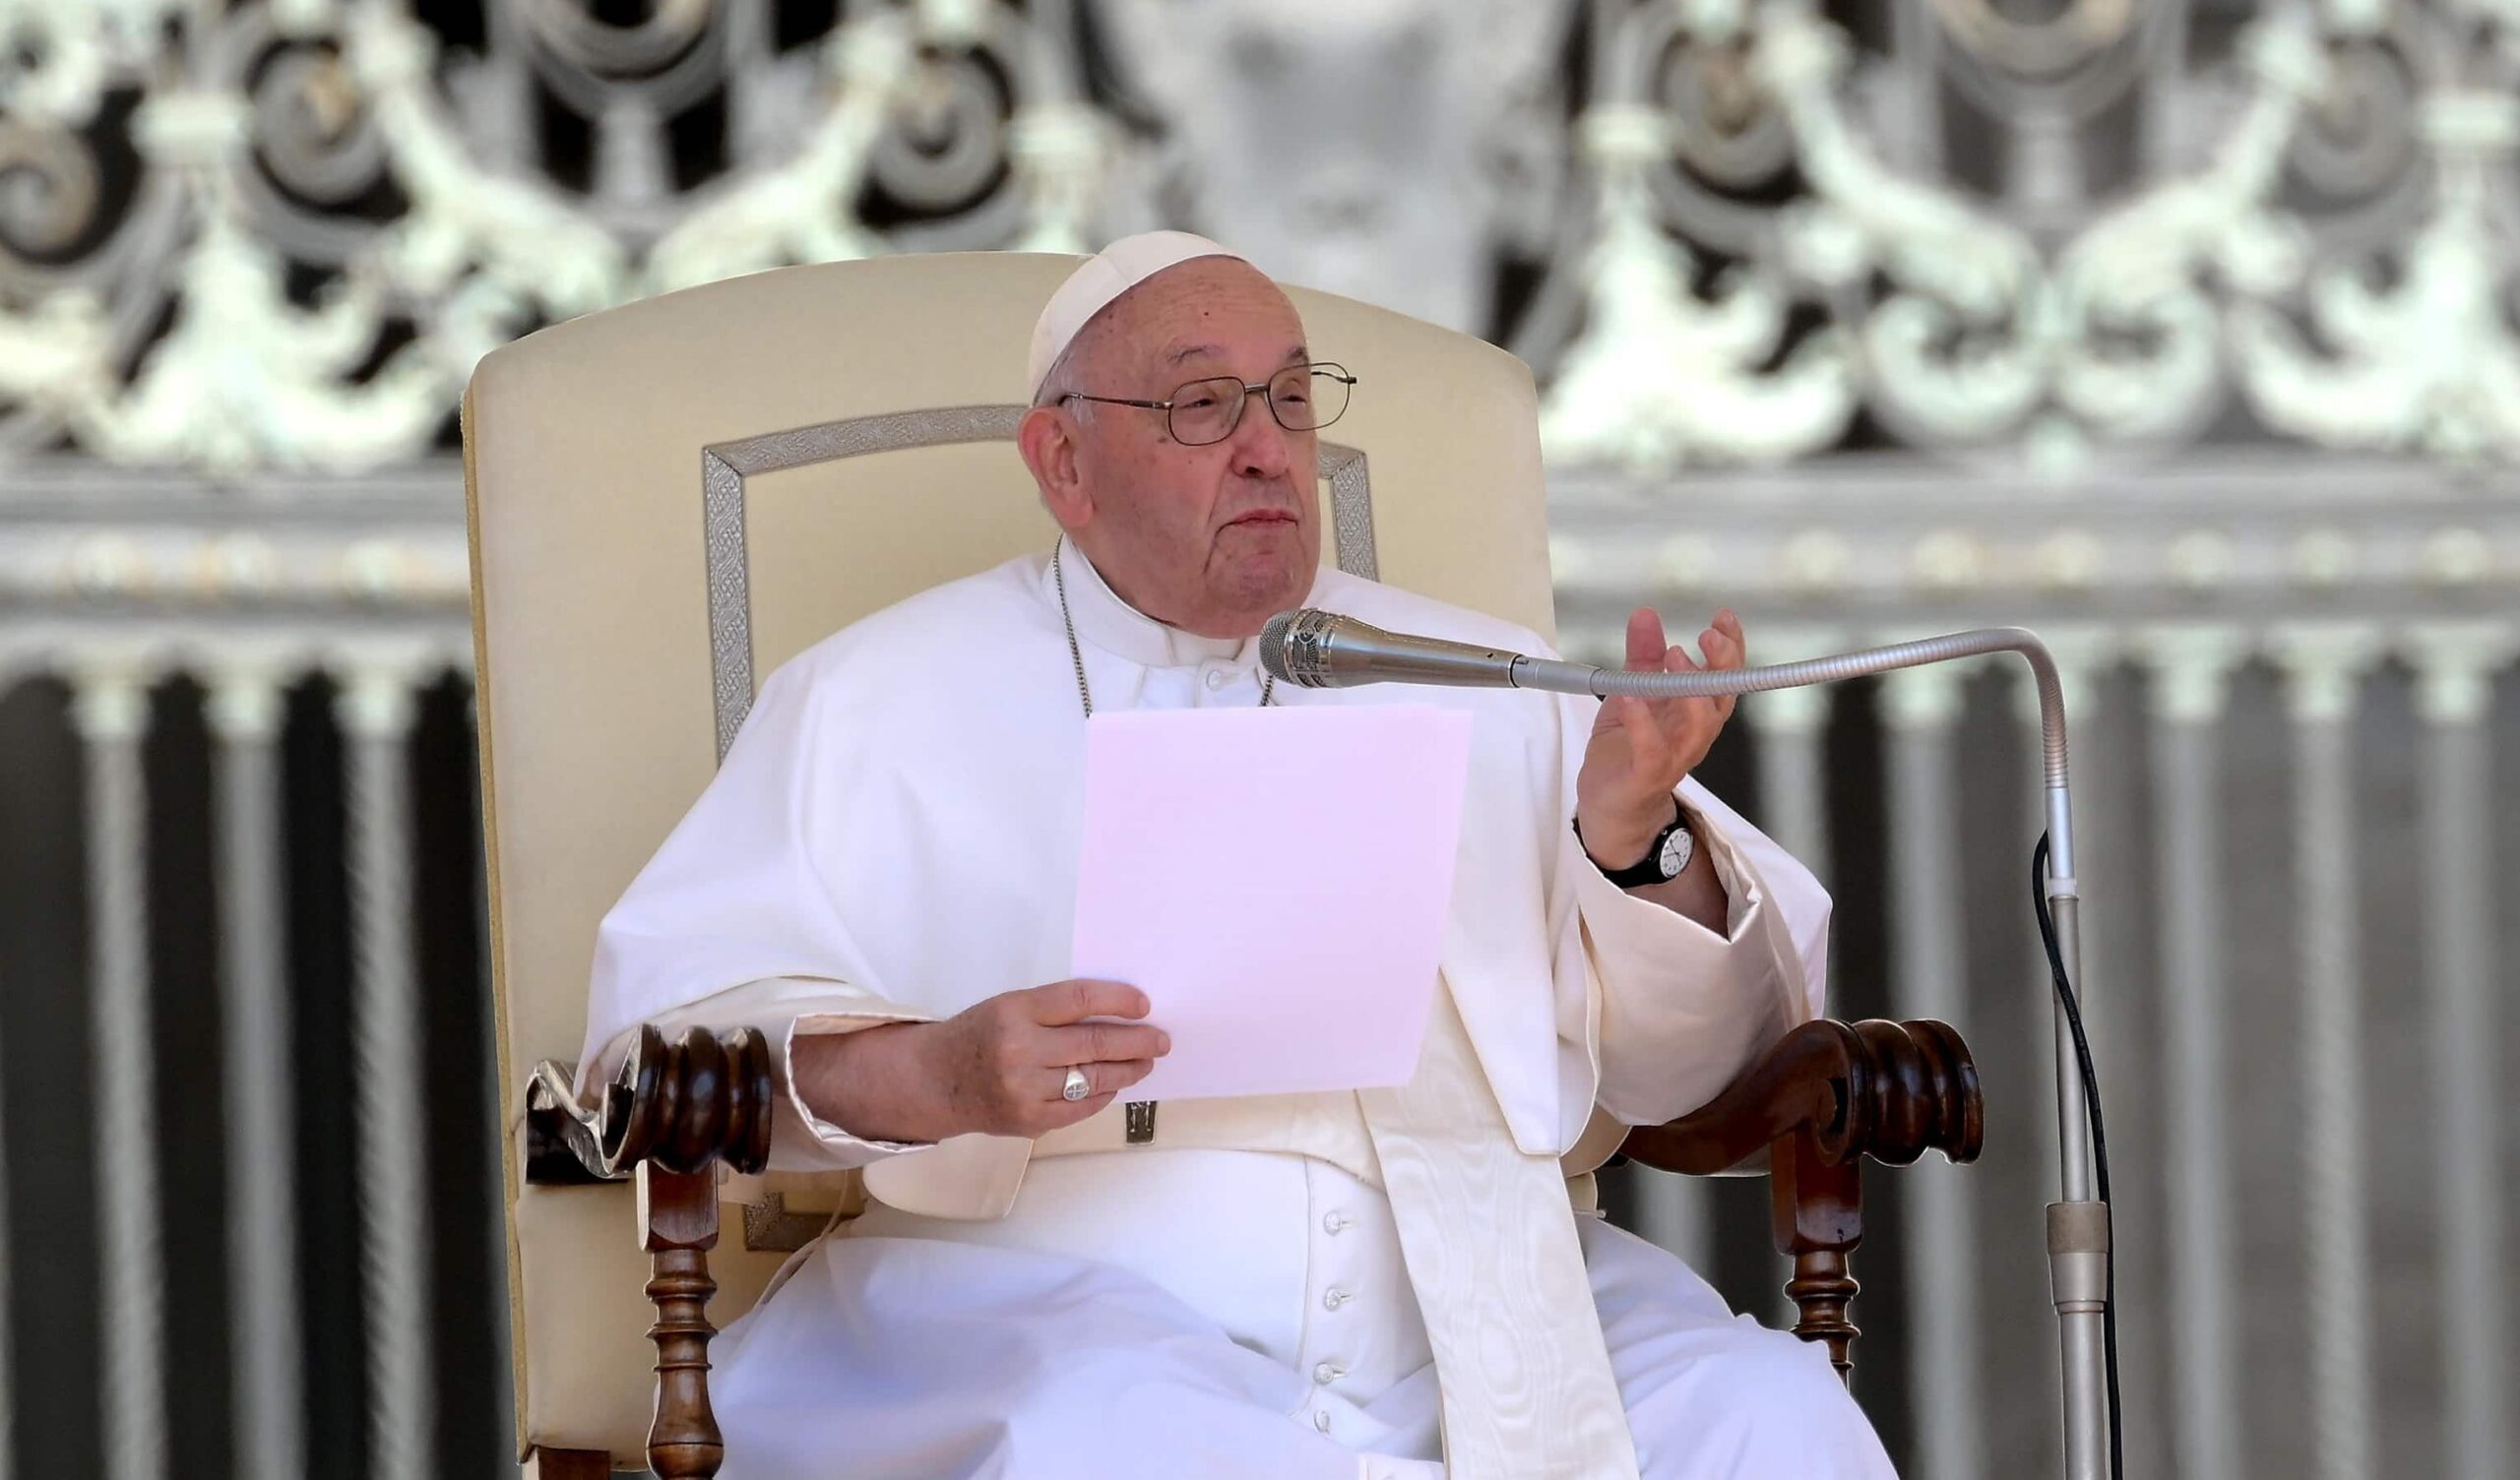 Natale di dolore tra interessi egoistici e umanità smarrita: Papa Francesco ha ragione